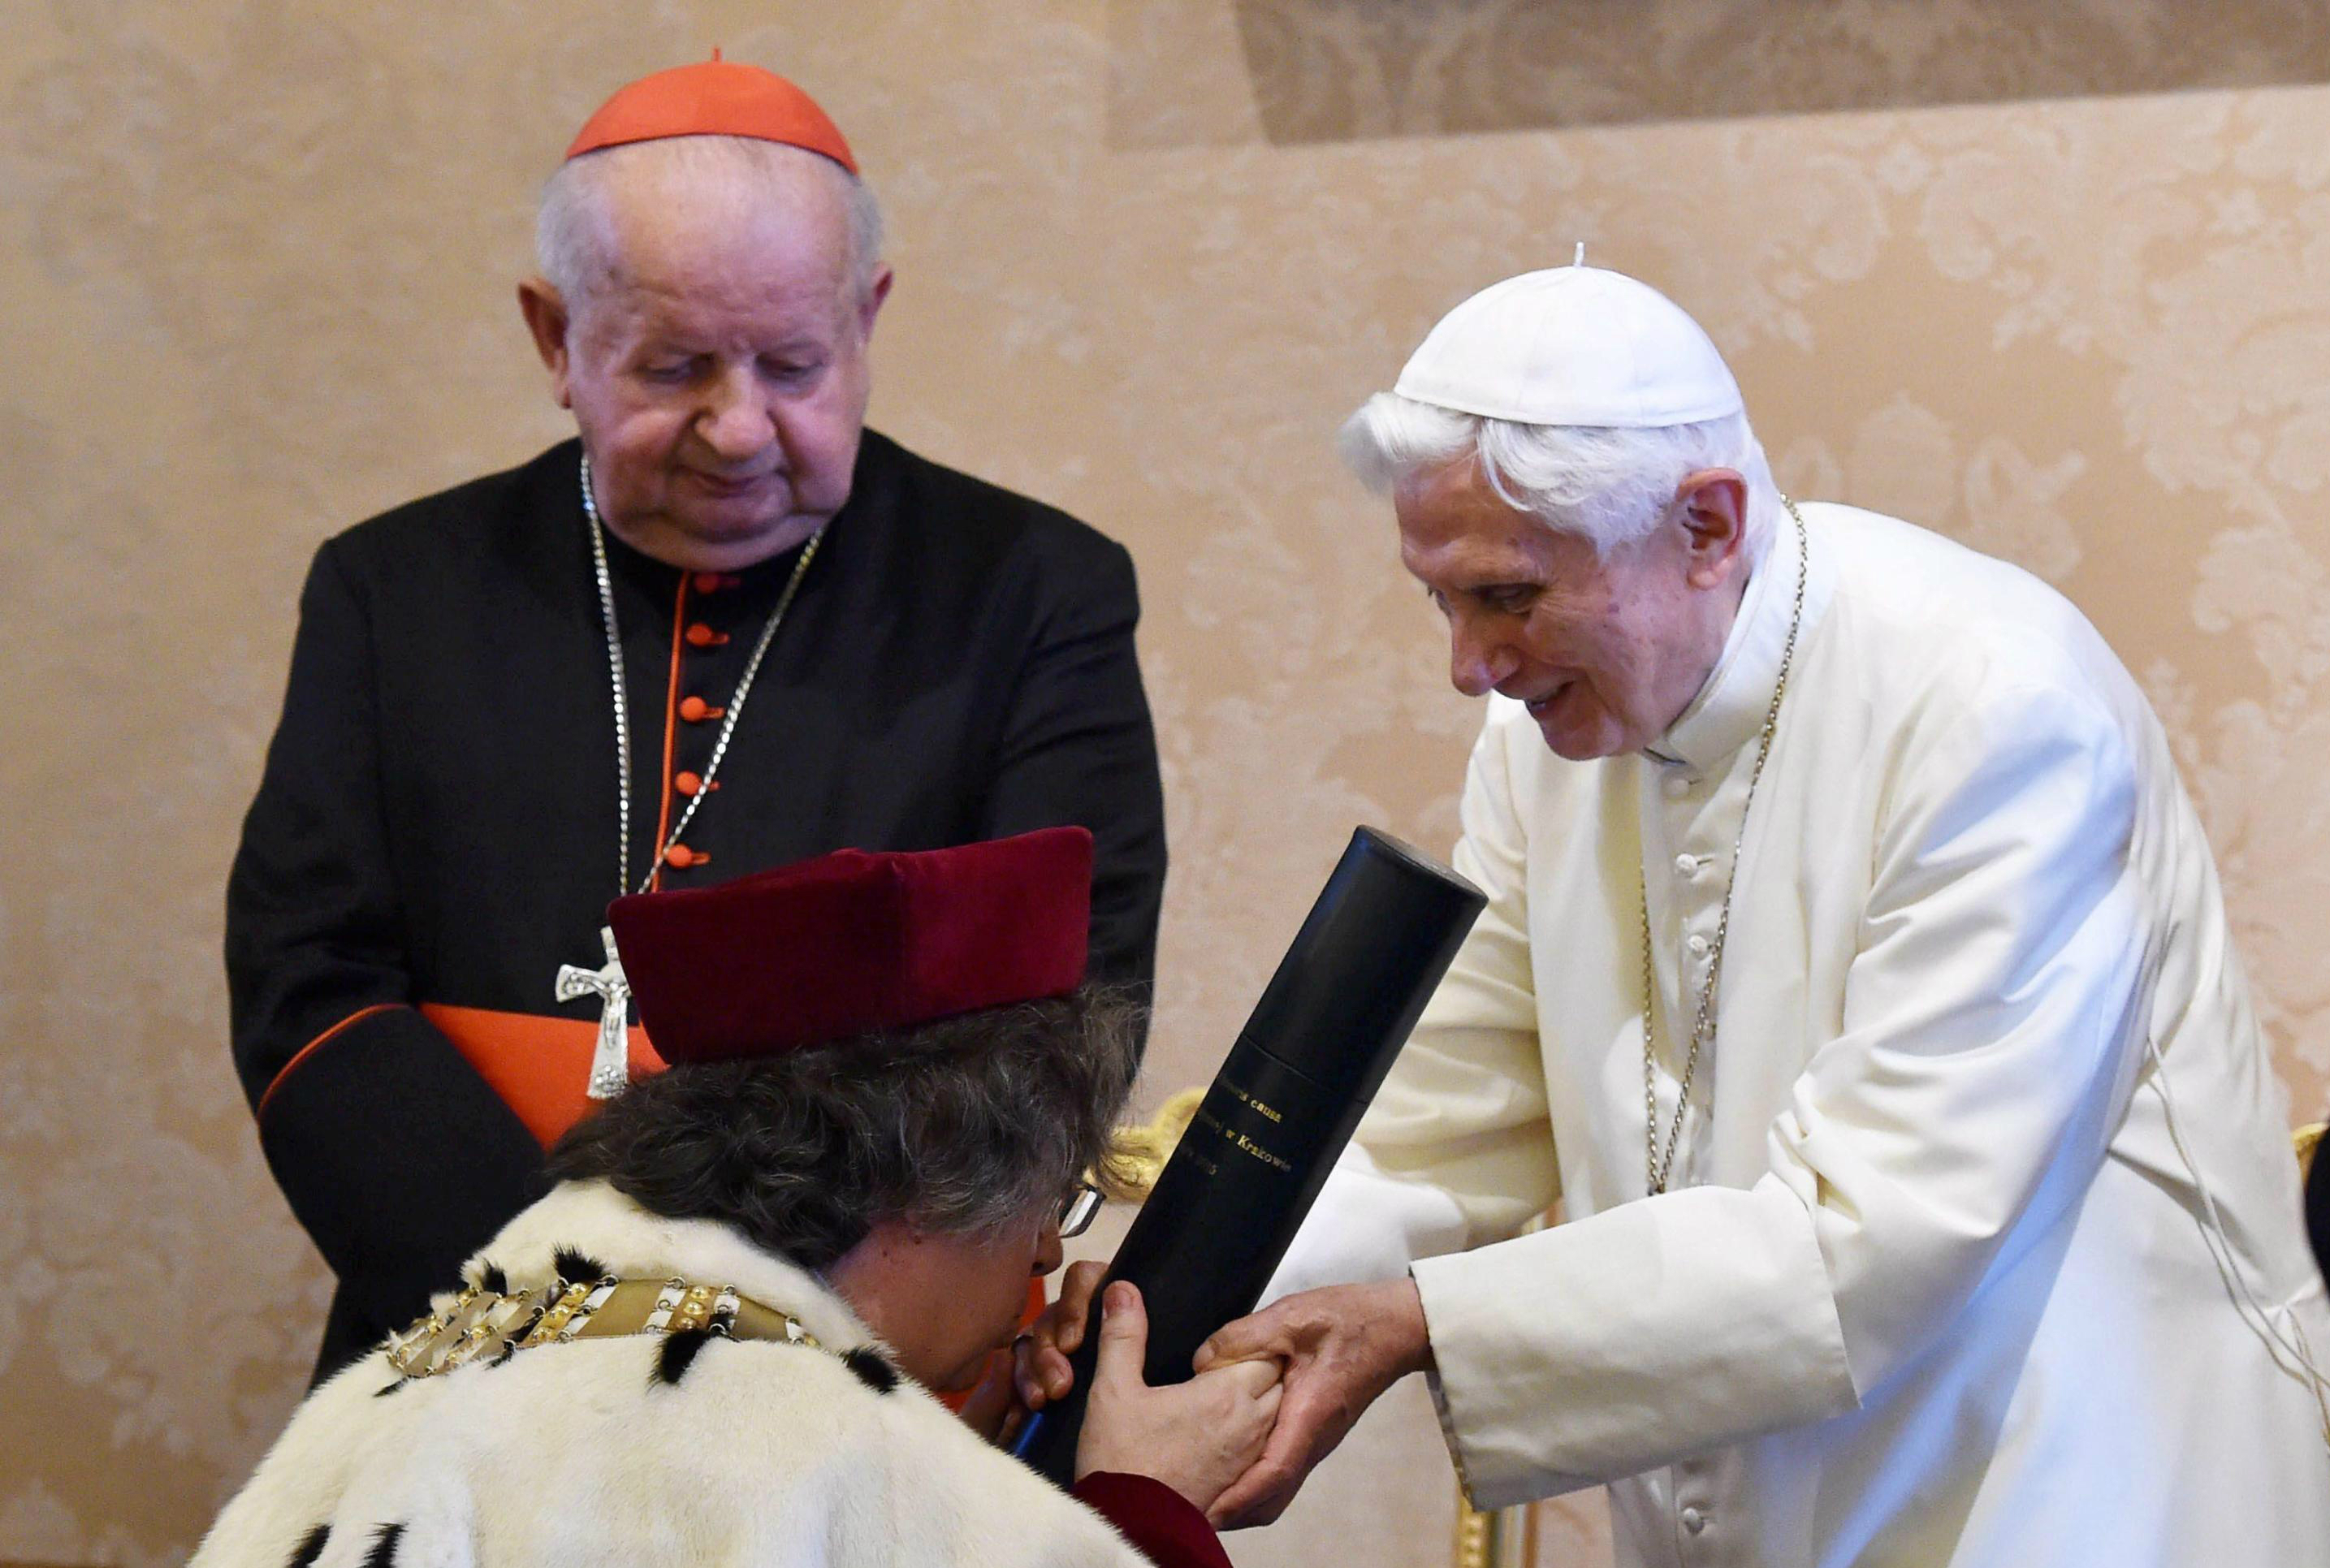 Pope Emeritus Benedict XVI received two honorary doctorates from Polish Universities